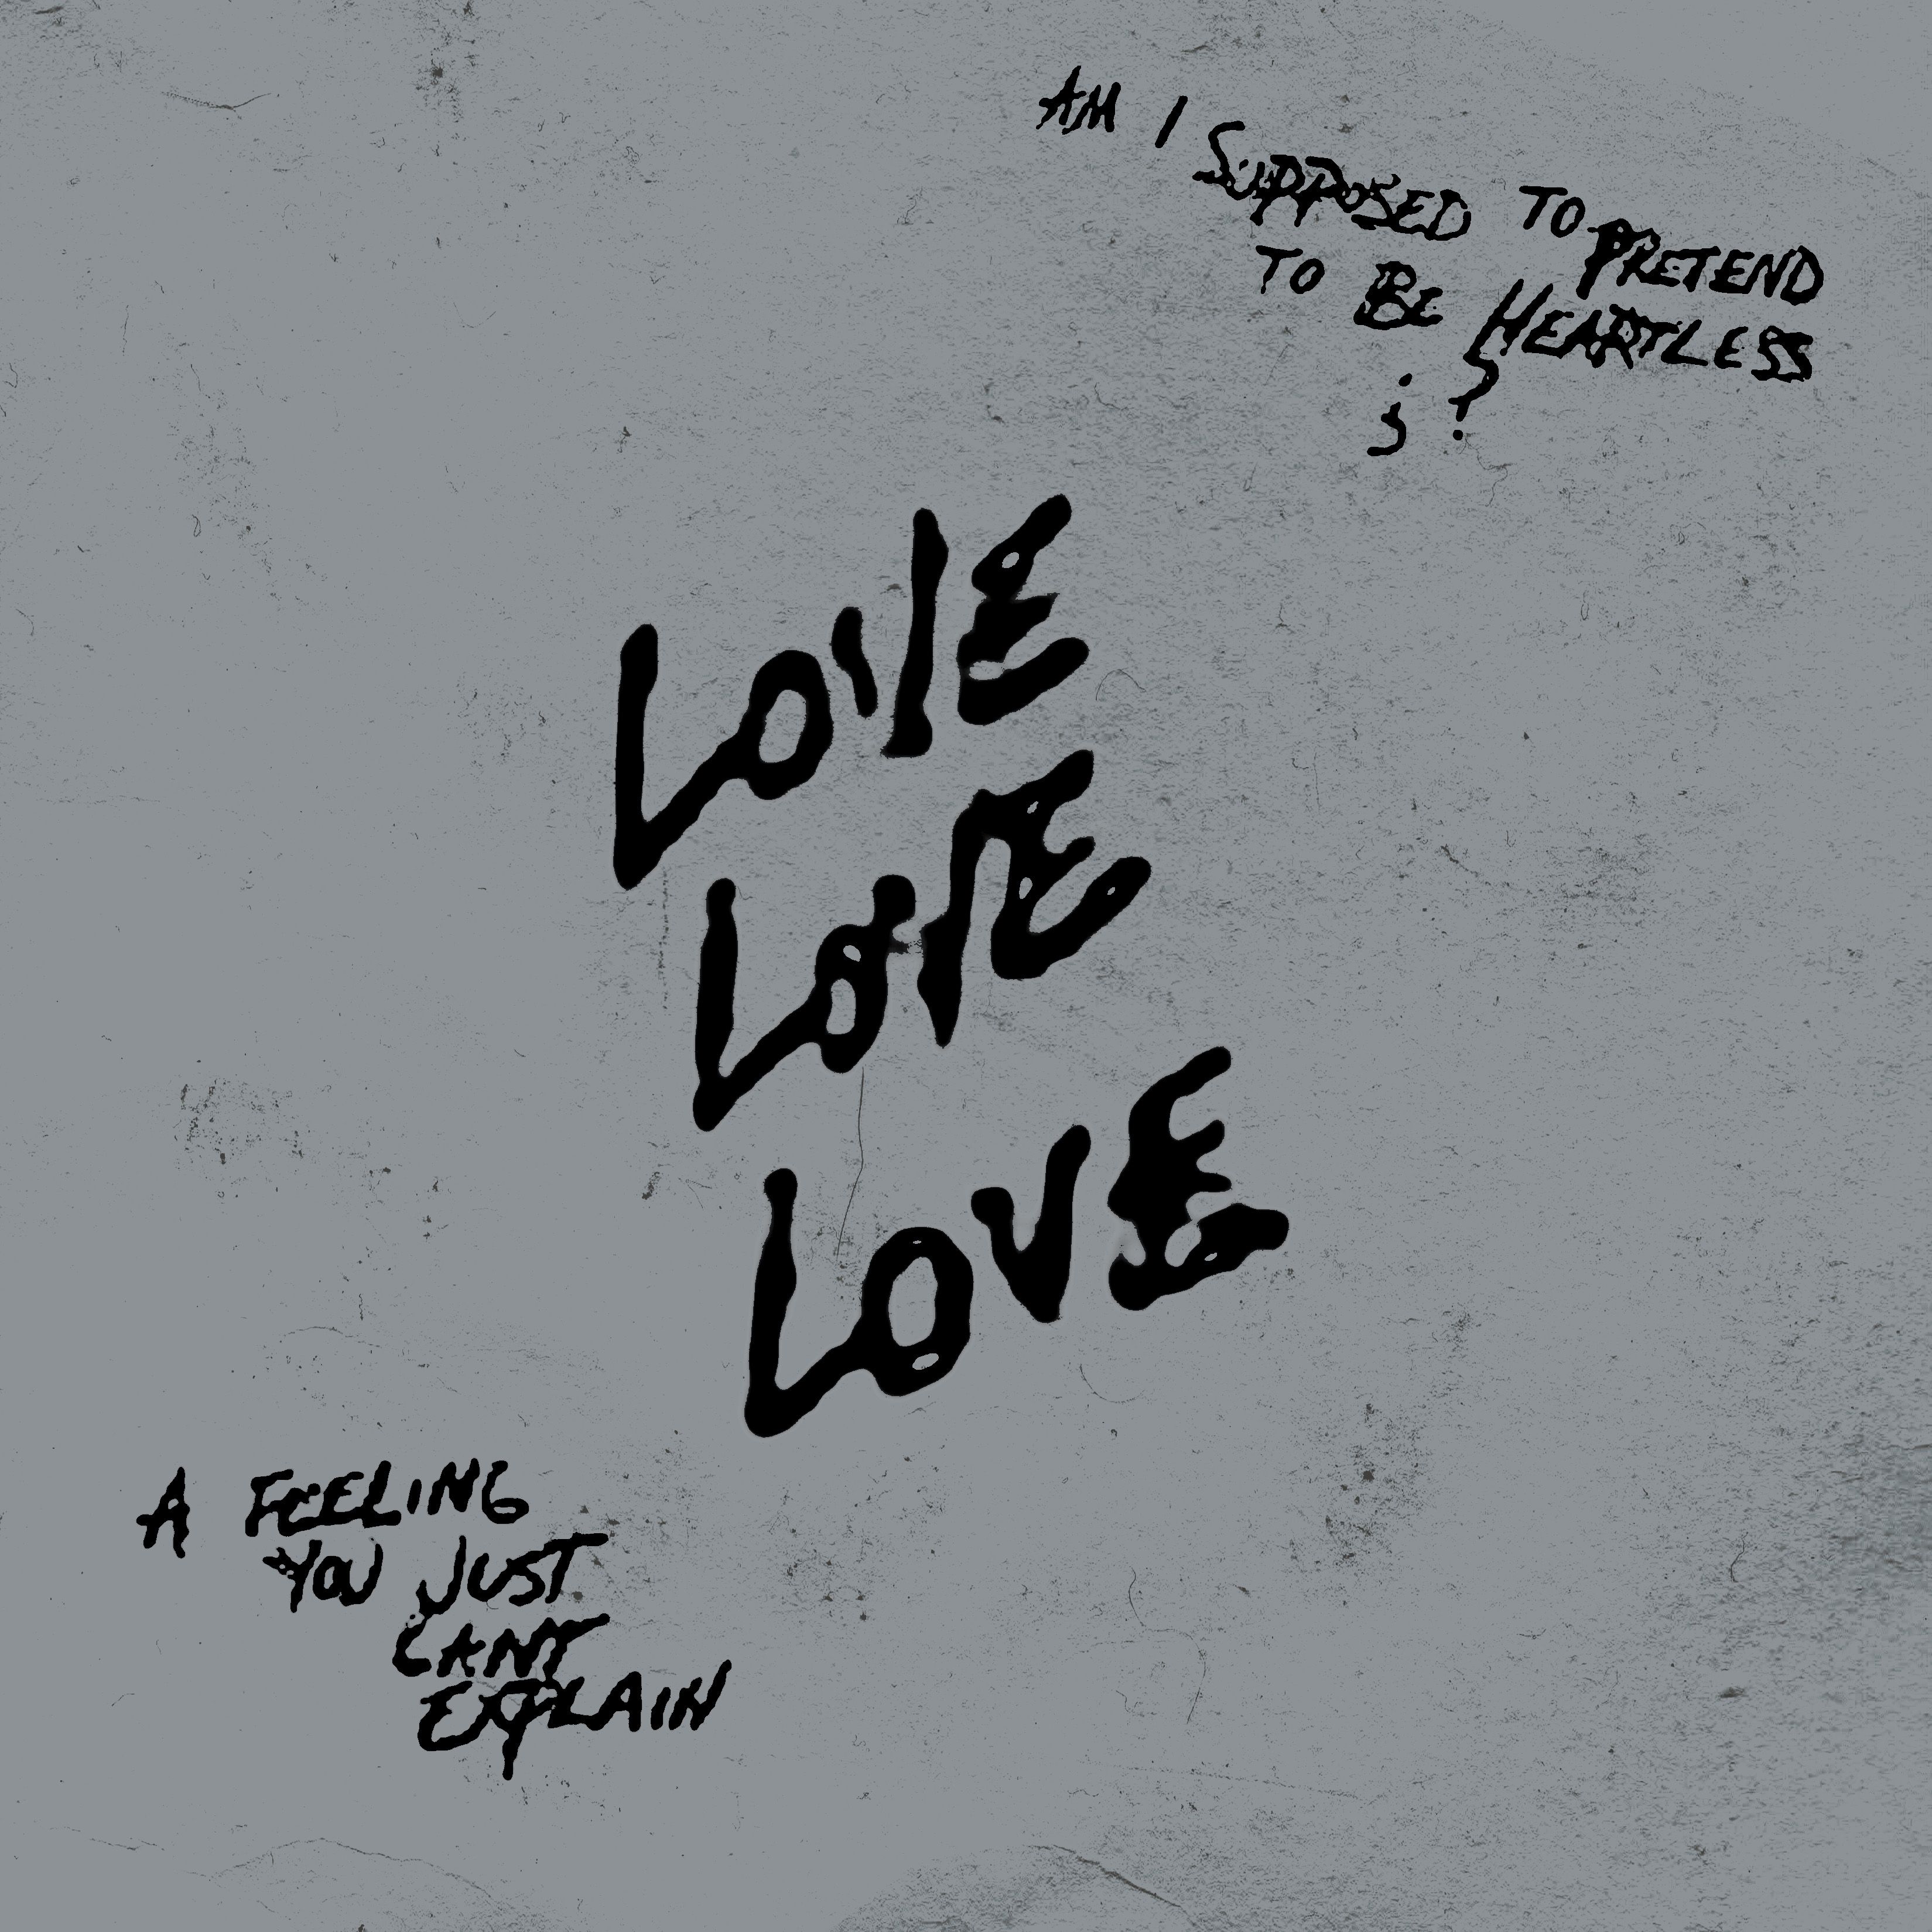 डाउनलोड करा Kanye West & XXXTENTACION - True Love